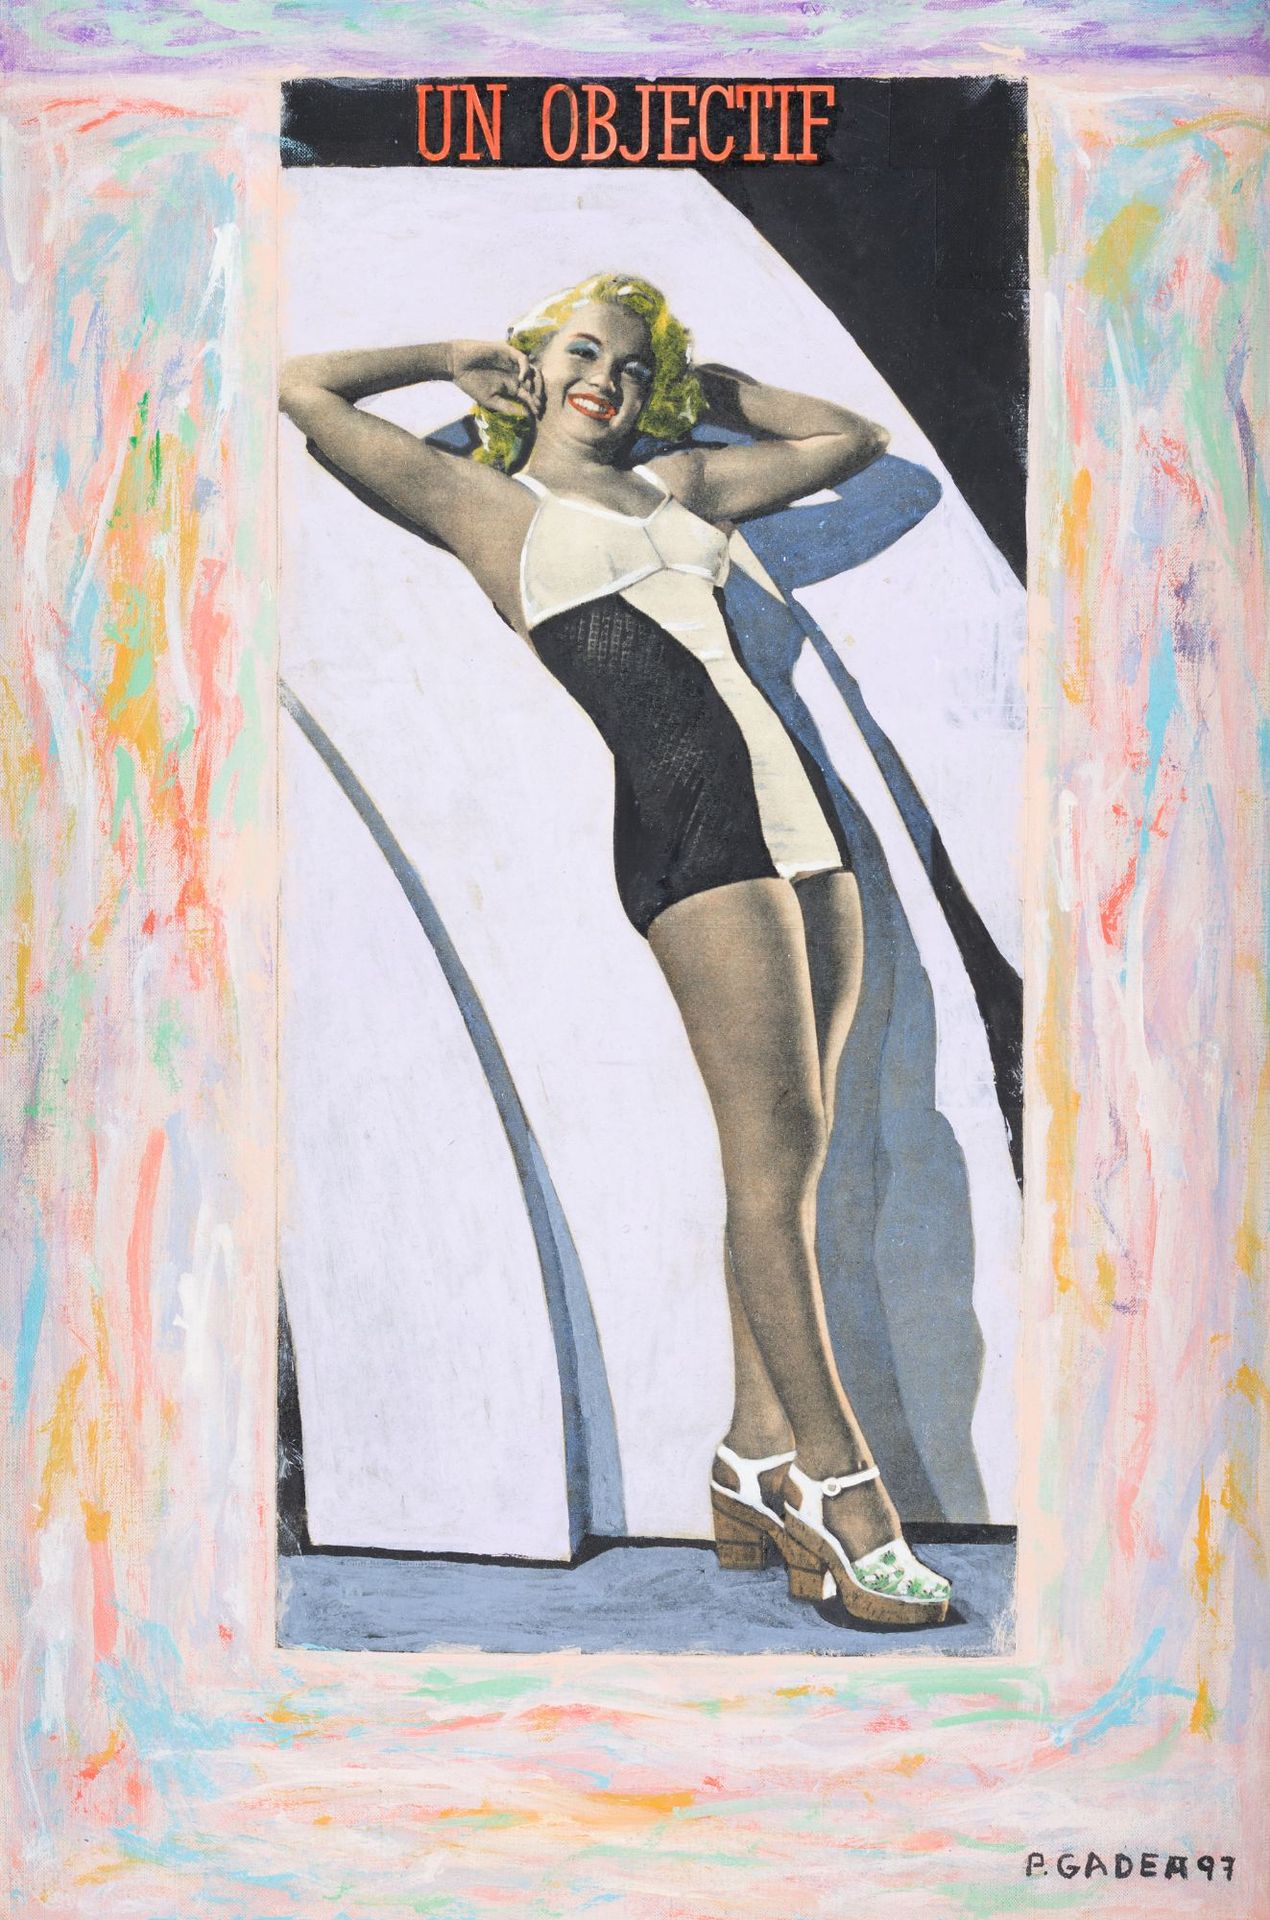 PATRICIA GADEA Madrid (1960) "The Marilyn Star", 1997 画布上的混合技术和拼贴画。在右下角有签名和日期。背面&hellip;